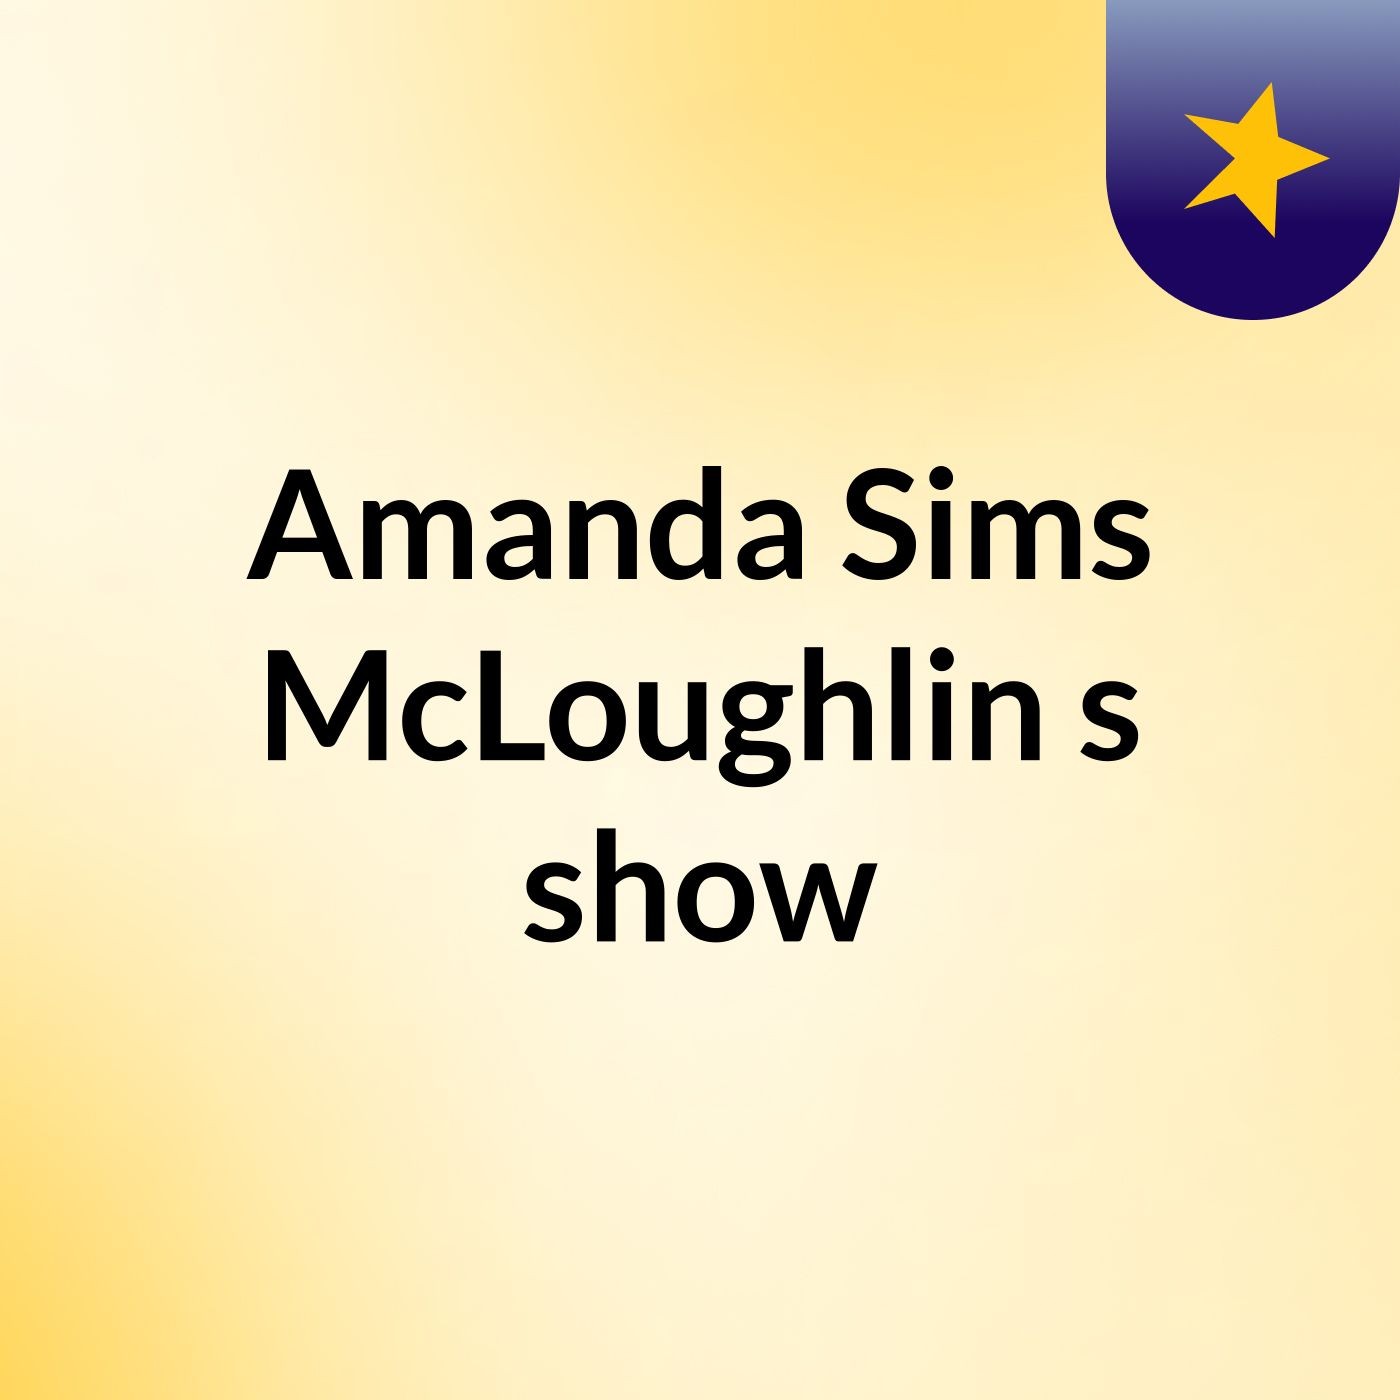 Amanda Sims McLoughlin's show